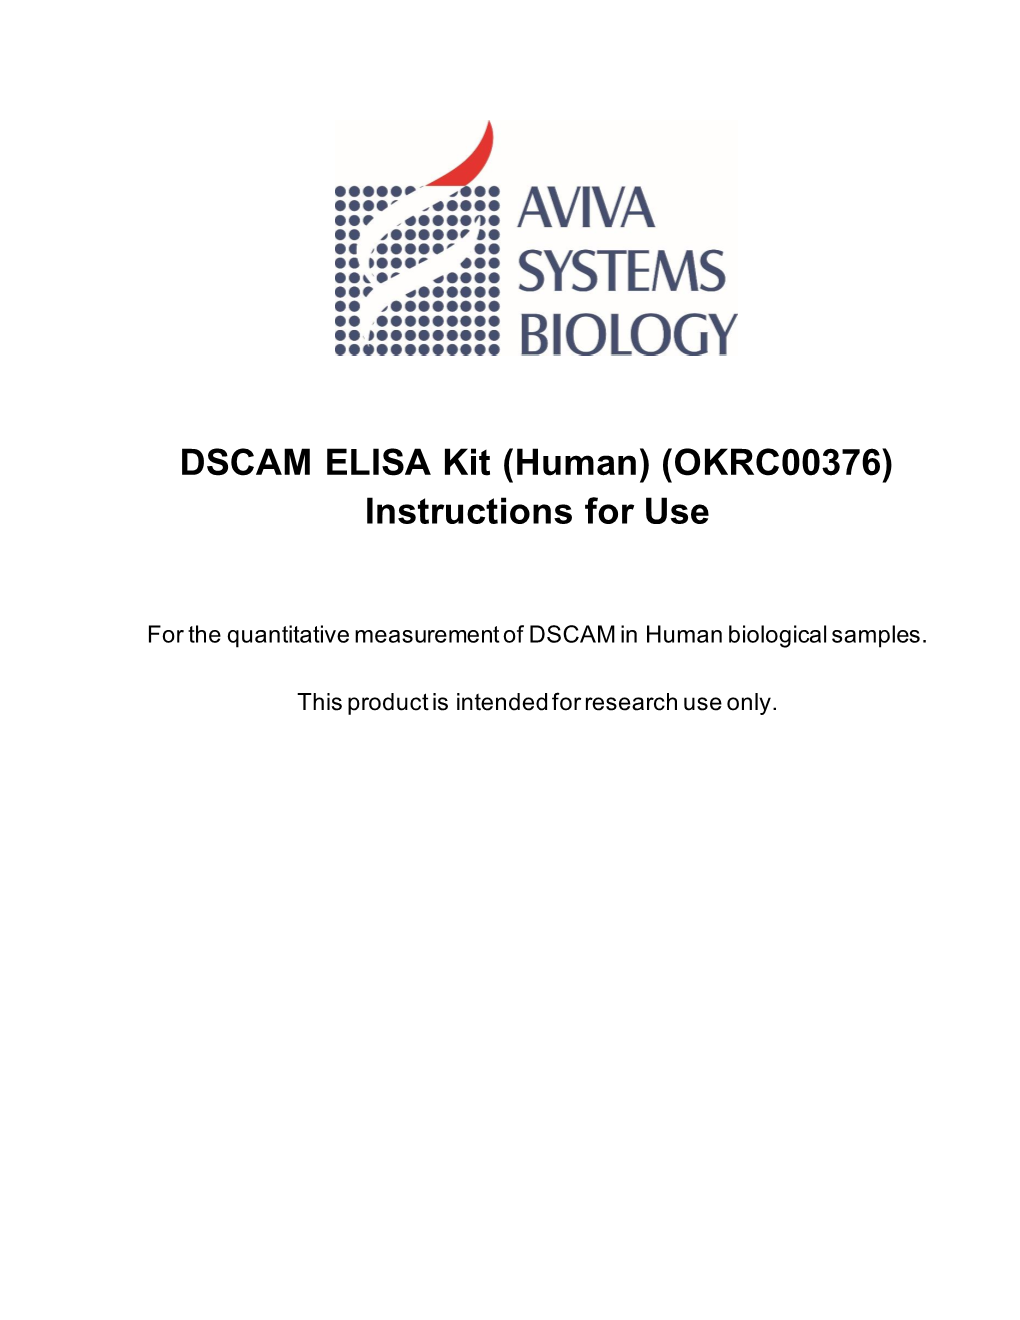 DSCAM ELISA Kit (Human) (OKRC00376) Instructions for Use